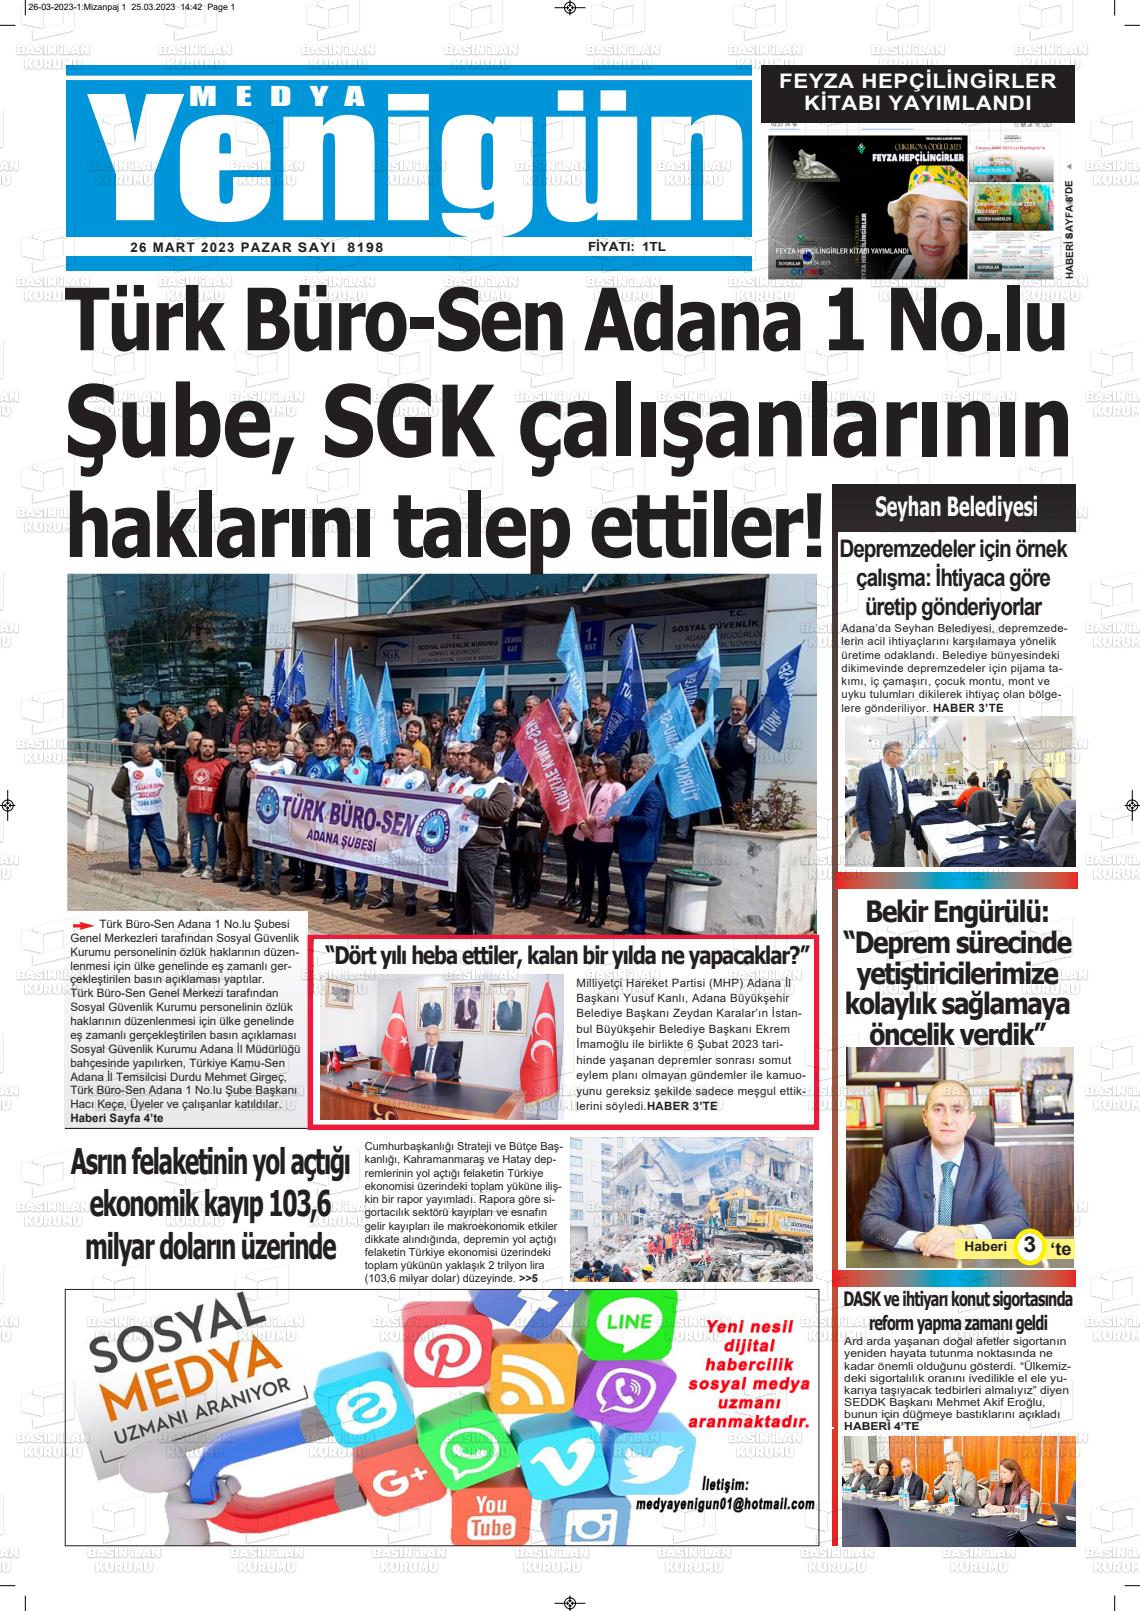 26 Mart 2023 Medya Yenigün Gazete Manşeti